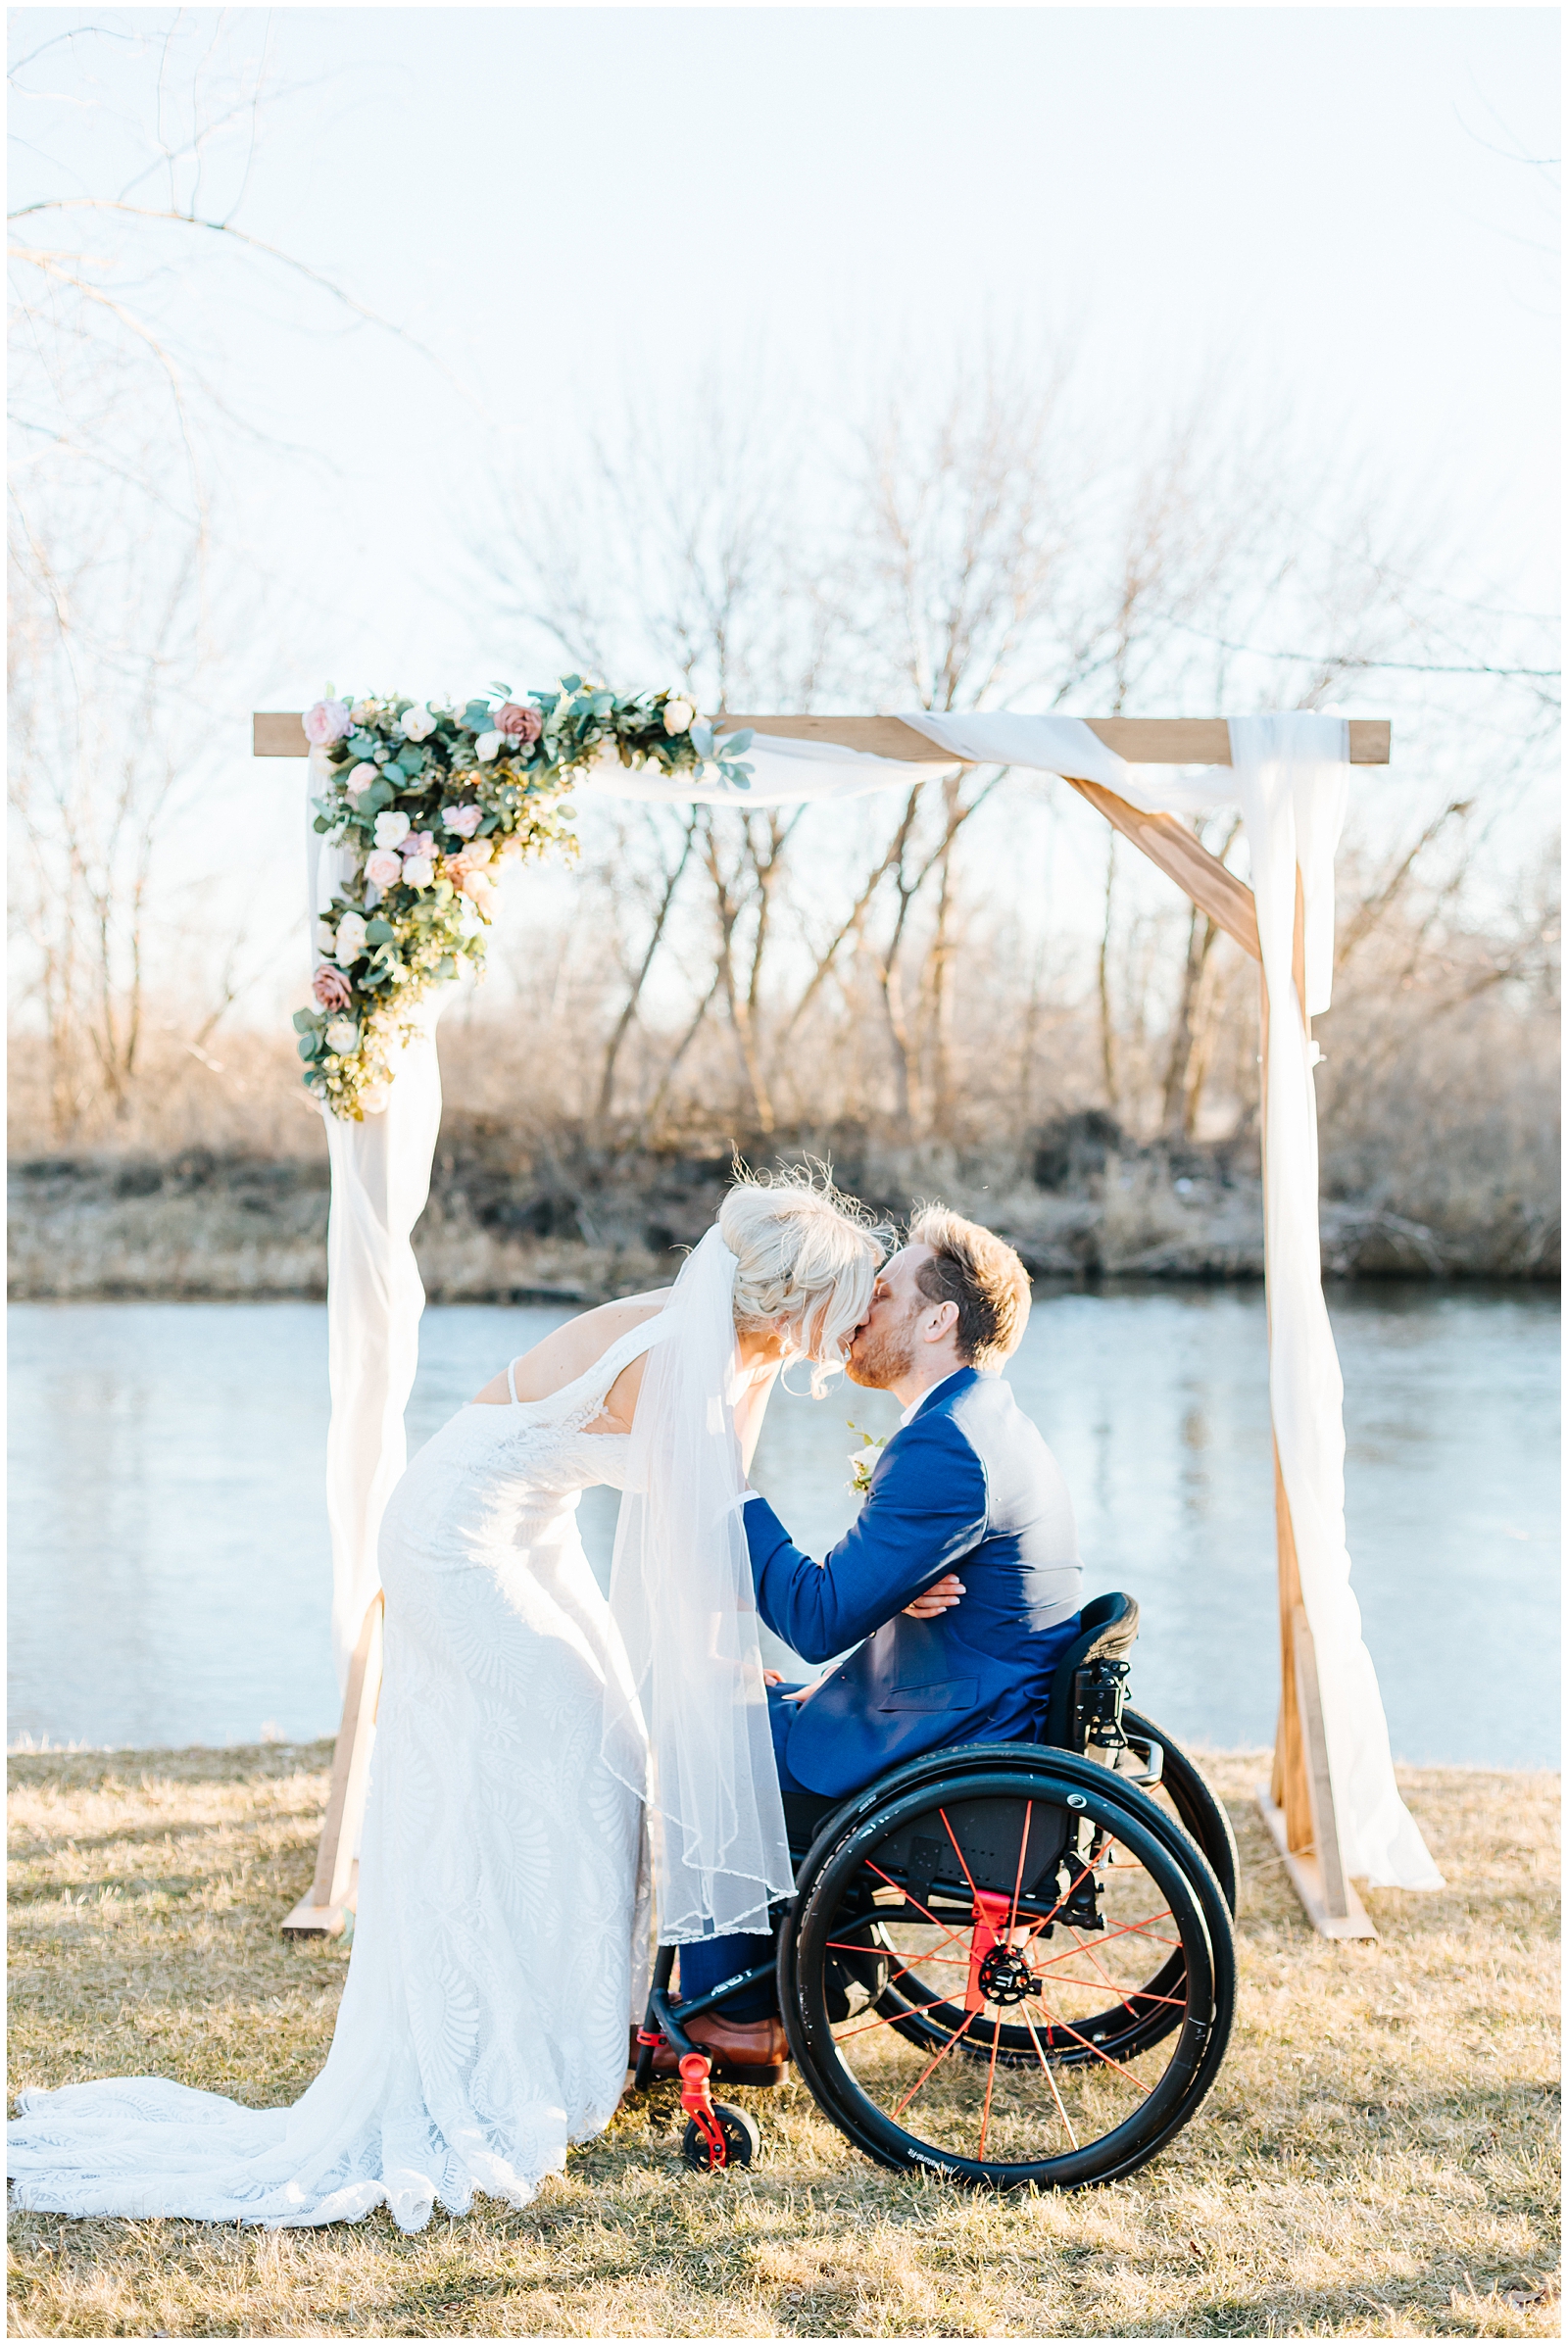 Heartfelt Idaho Spring Elopement Wedding Ceremony Bride and Groom share a Kiss